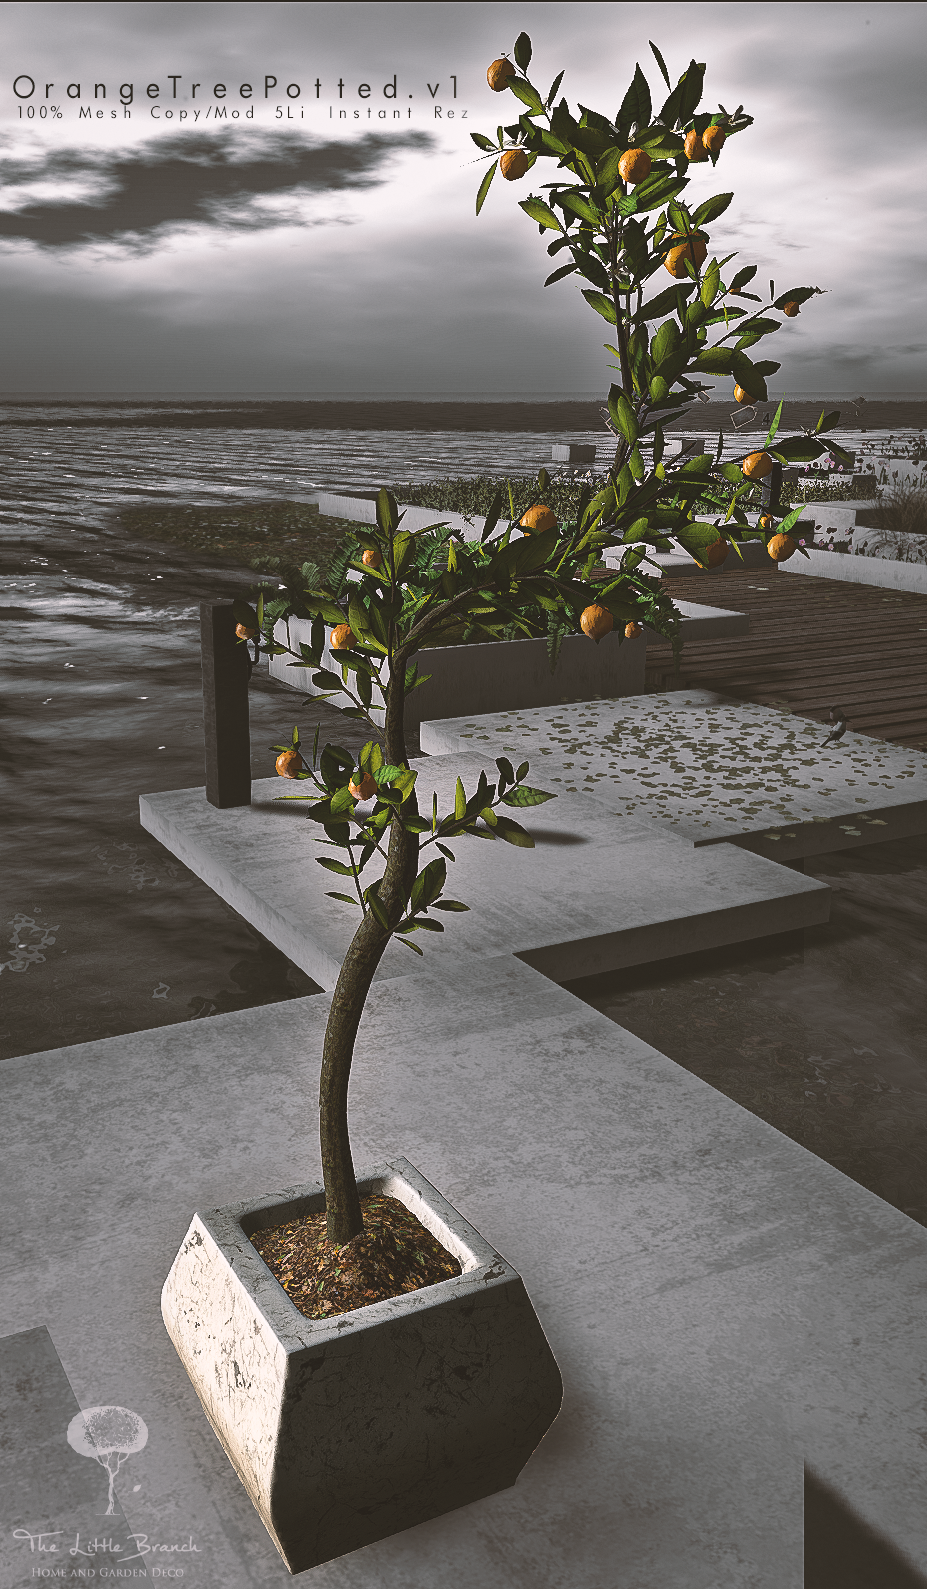 The Little Branch – Potted Orange Tree v.1